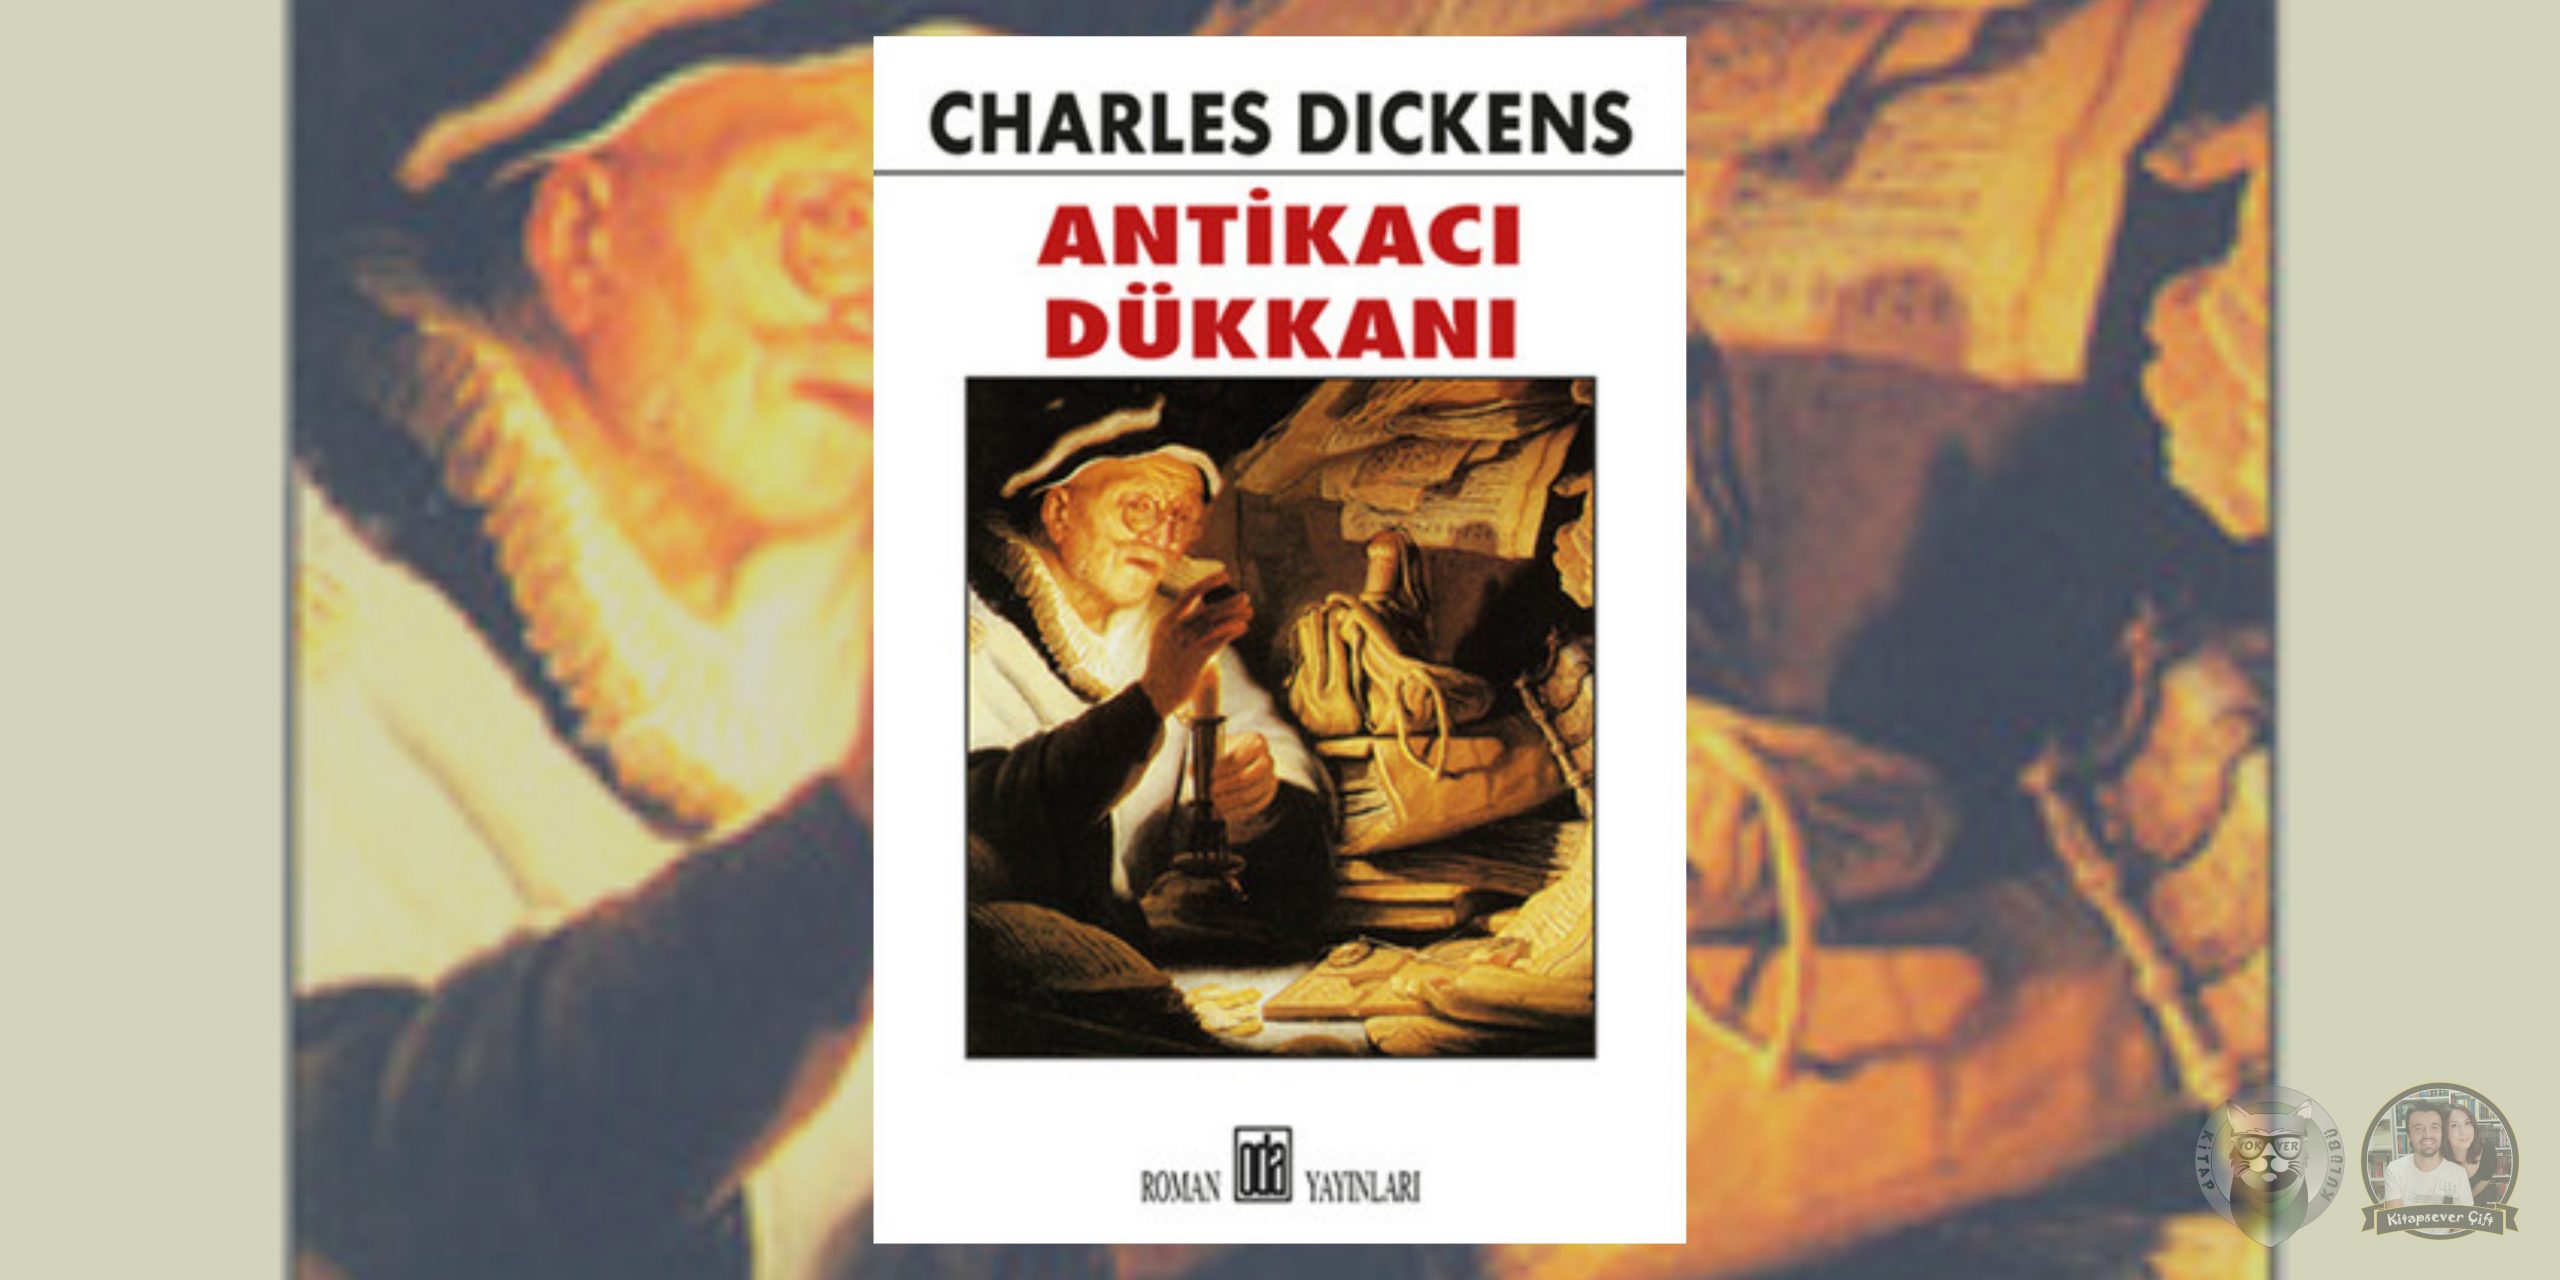 charles dickens kronolojik kitap sırası 3 – antikaci dukkani scaled